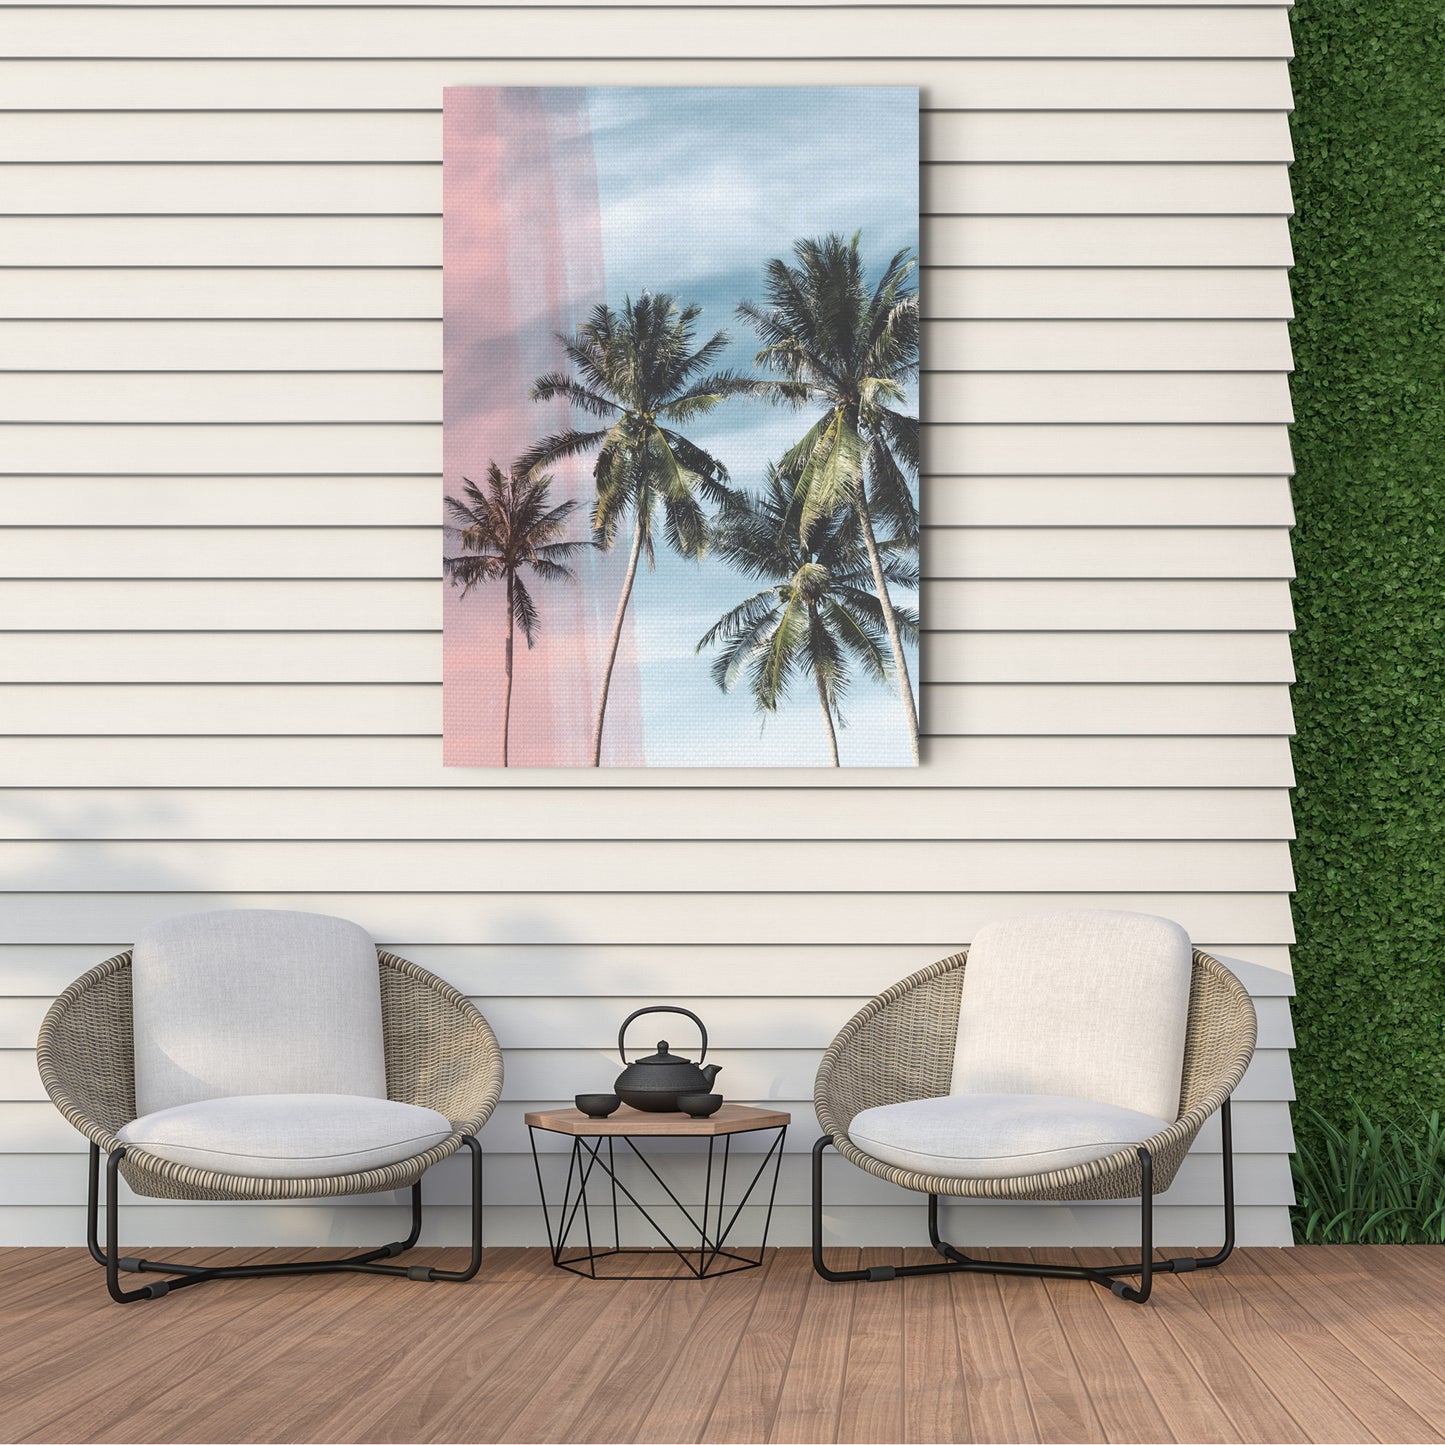 Tropical Palm Trees Outdoor Canvas Art Decor Print - 28x40